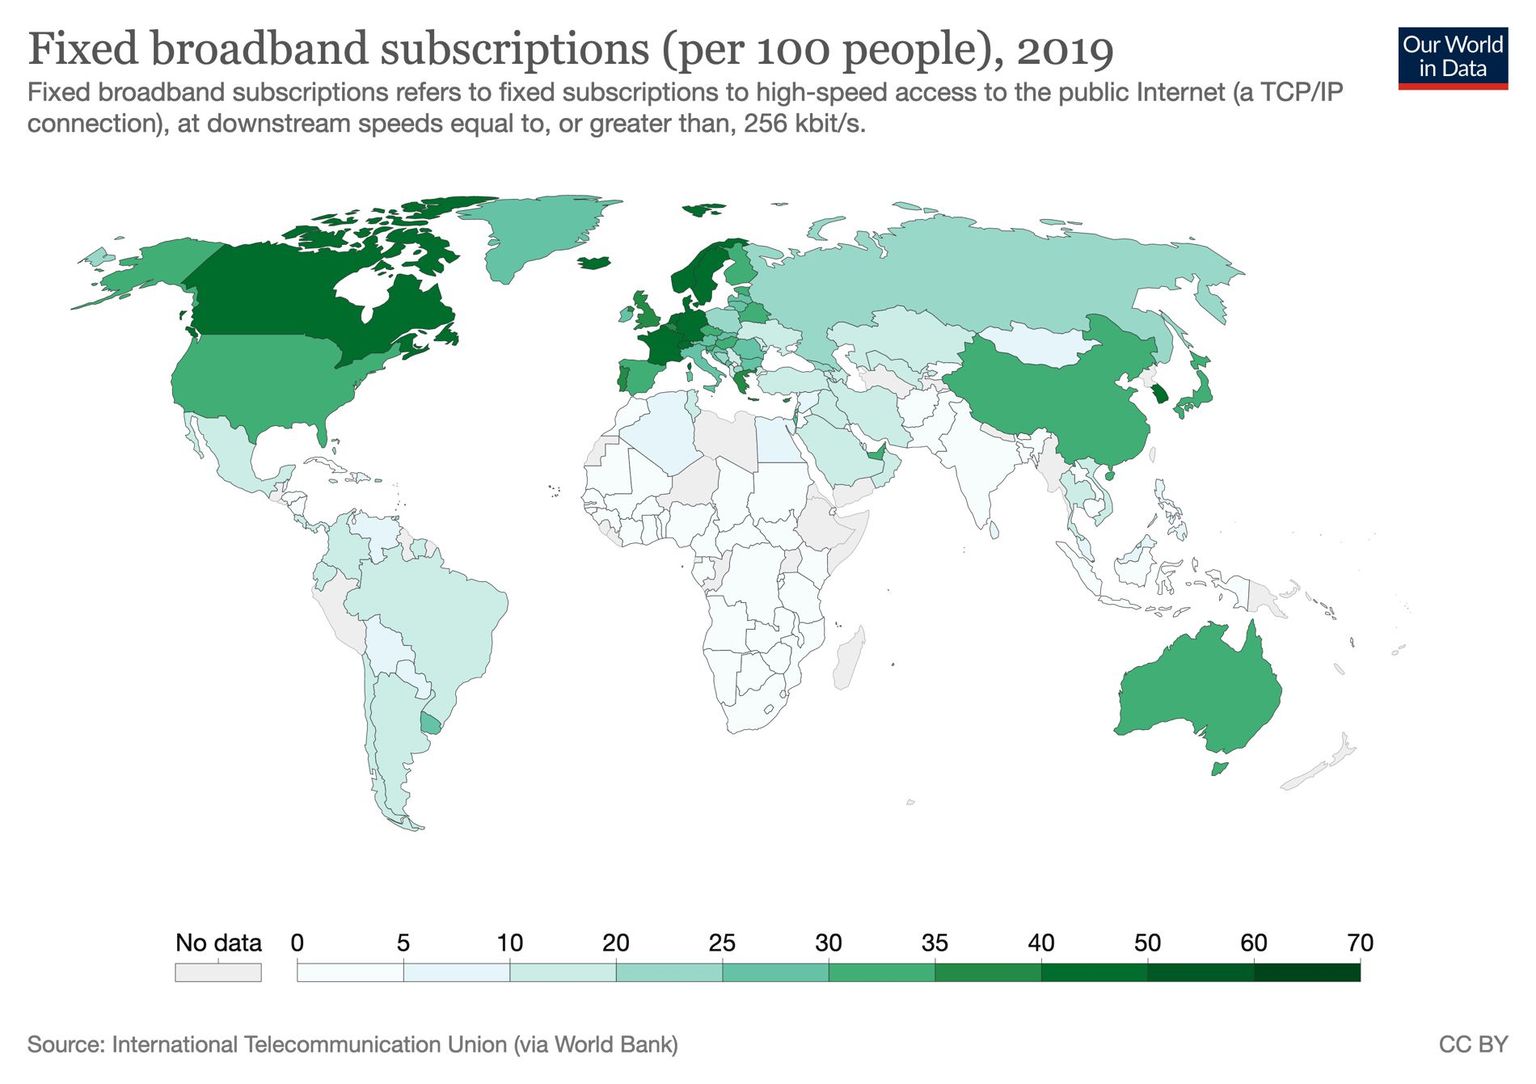 Fixed broadband subscriptions per 100 people, 2019